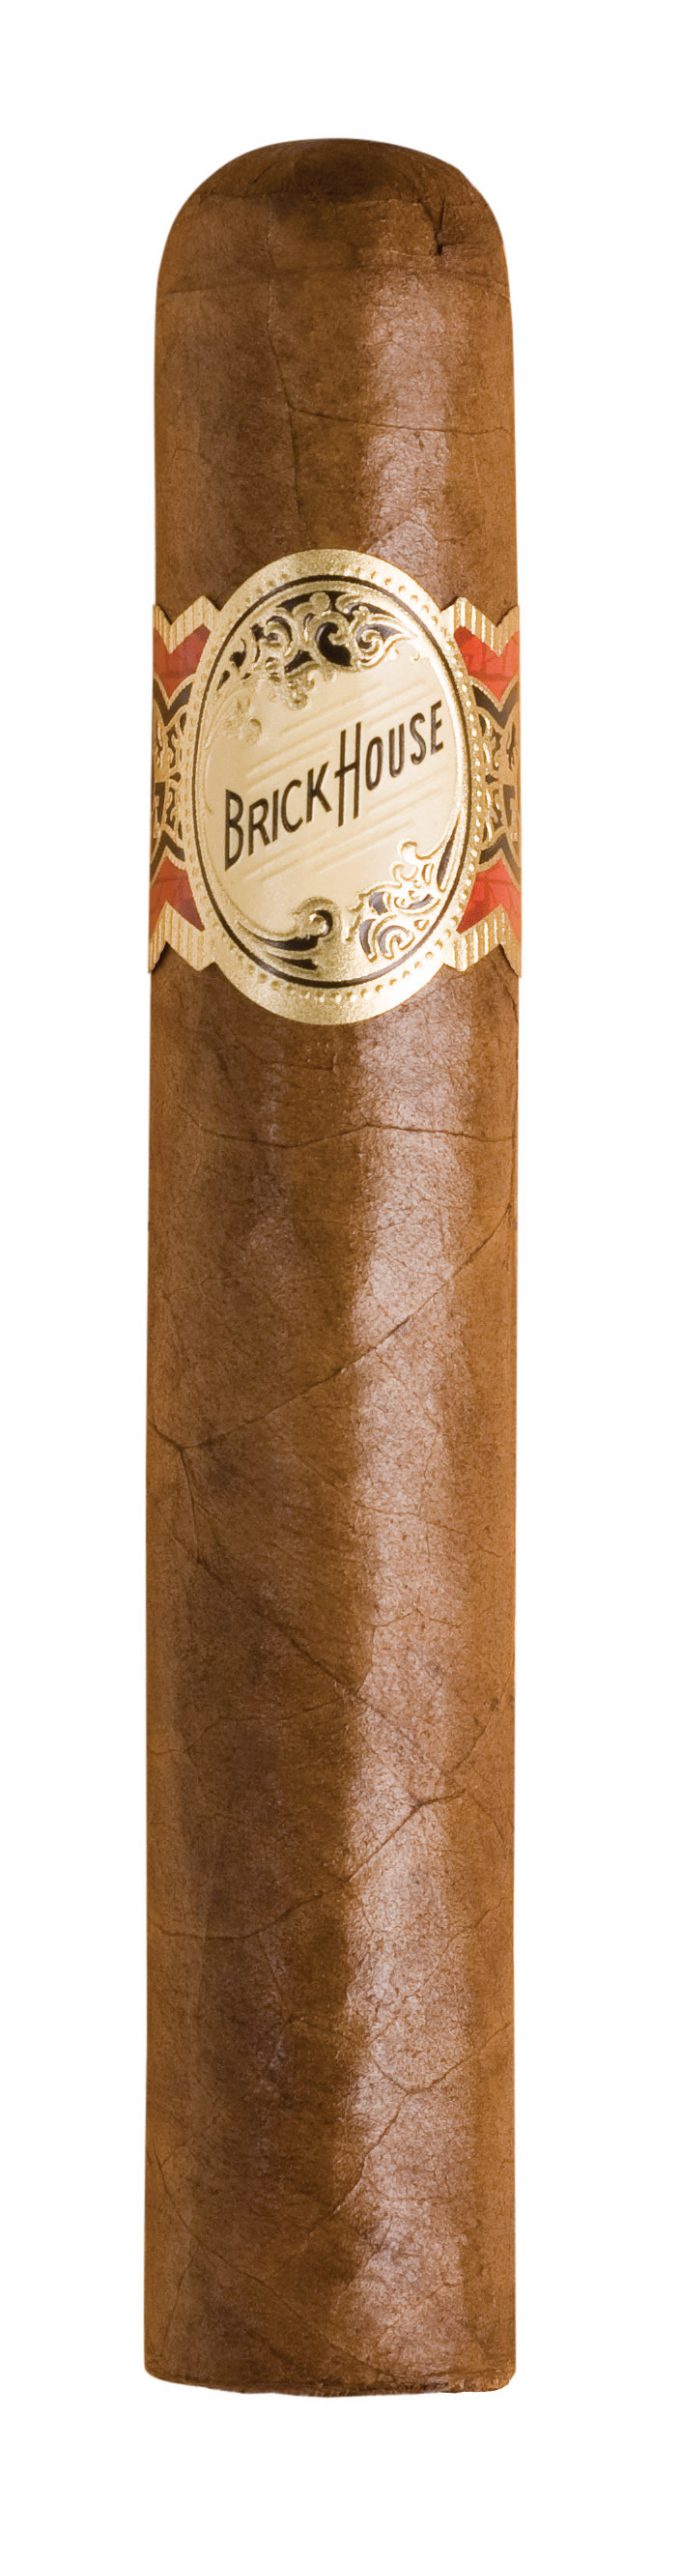 single brick house robusto cigar